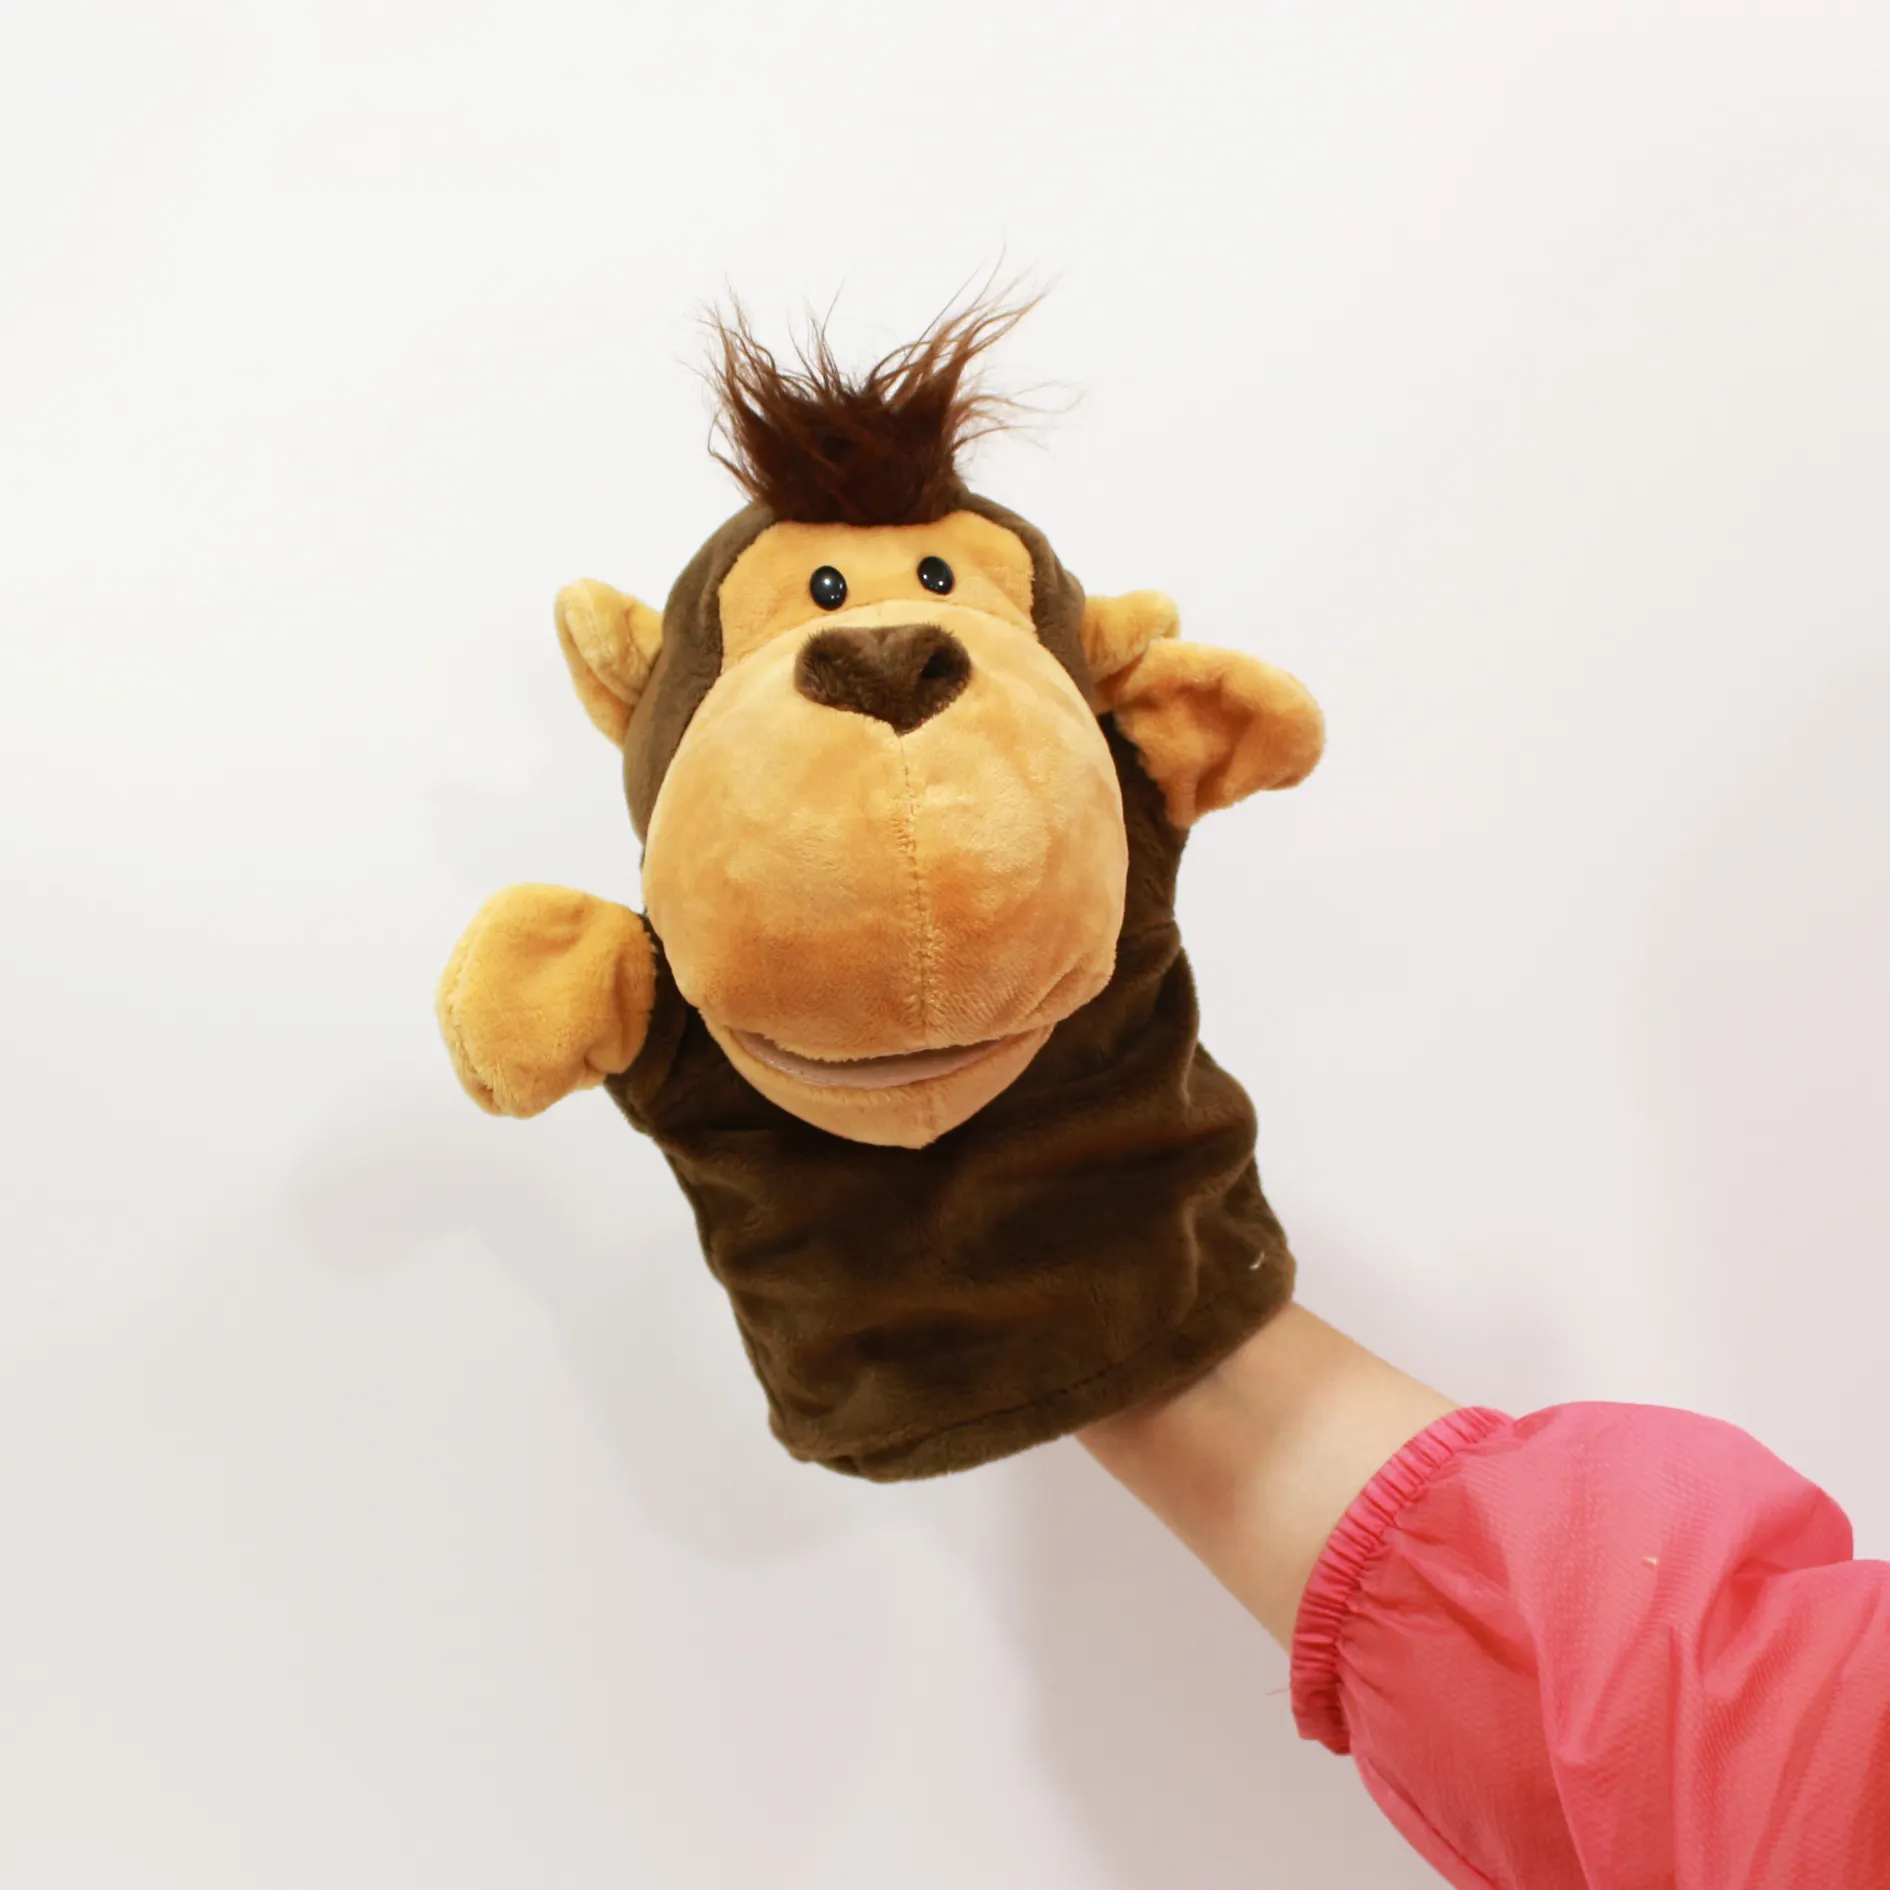 Lovely storytelling hand puppet plush animal toy